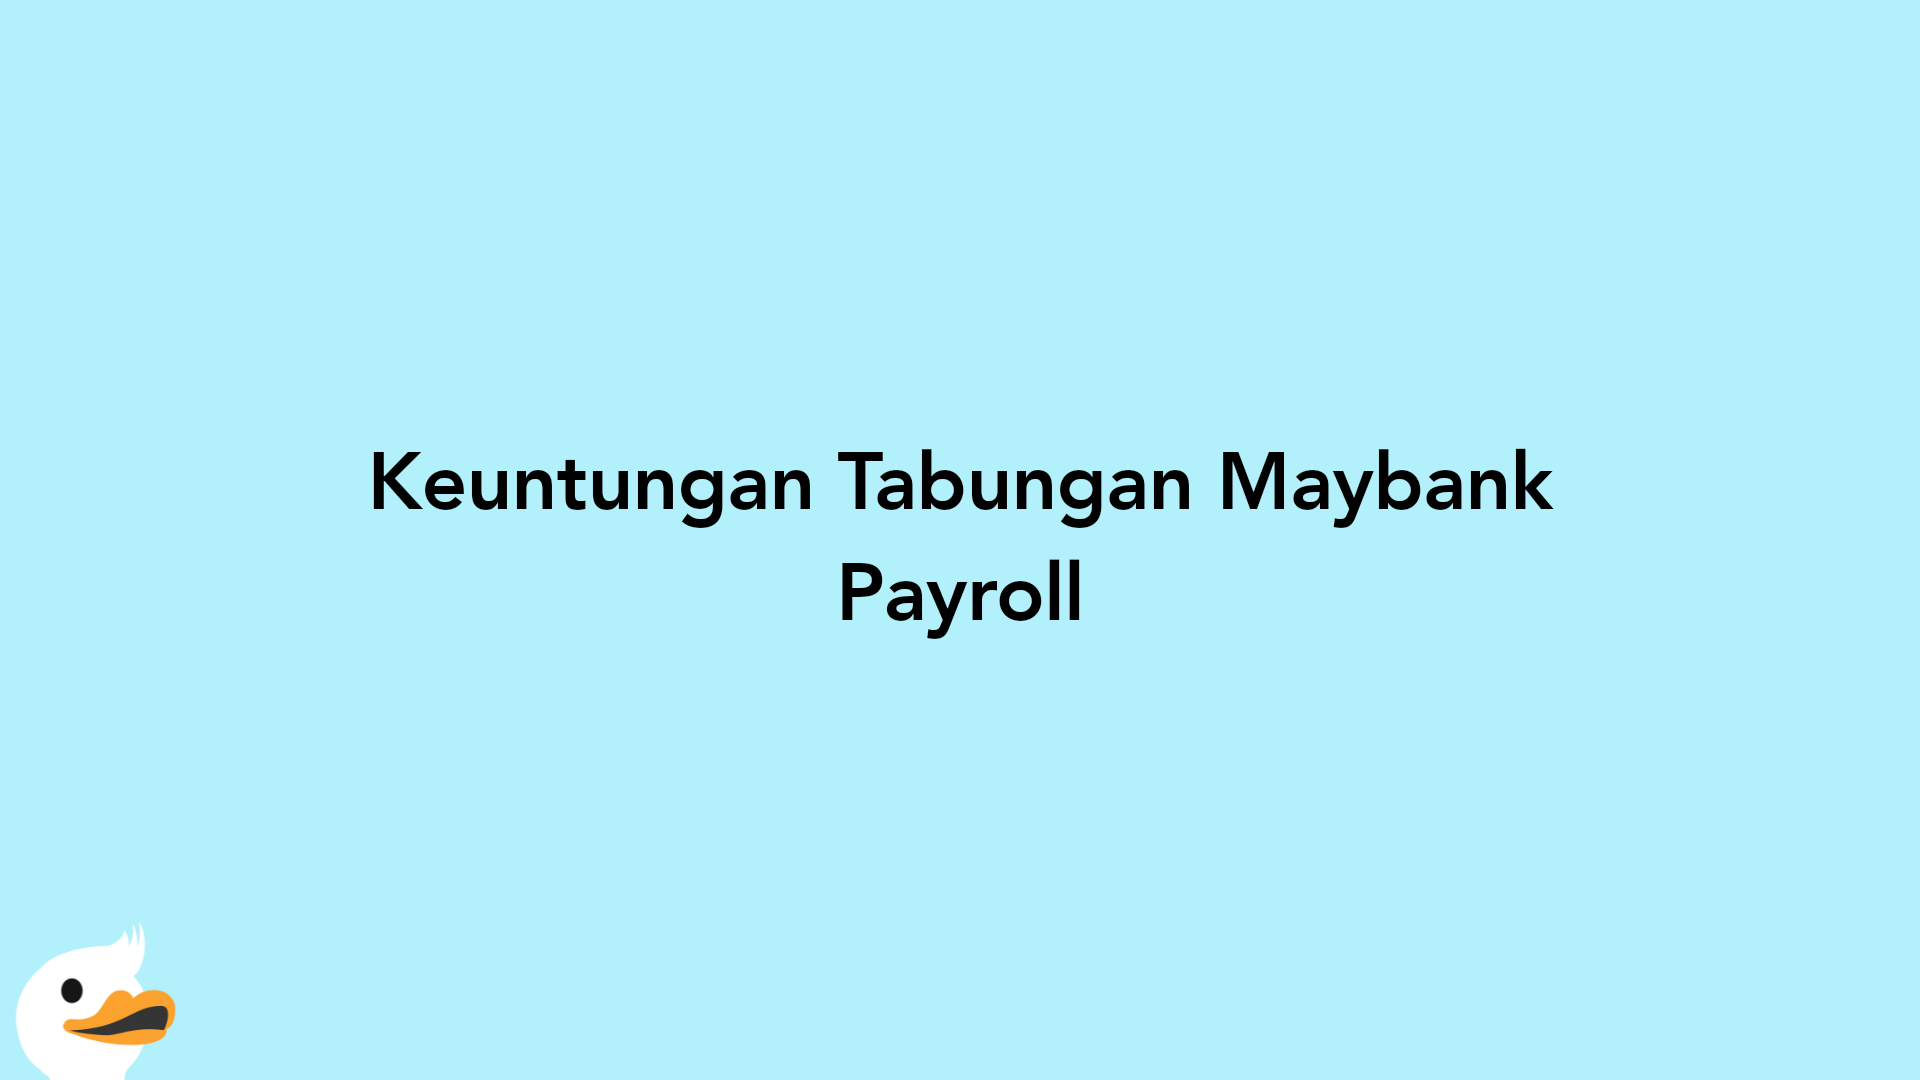 Keuntungan Tabungan Maybank Payroll